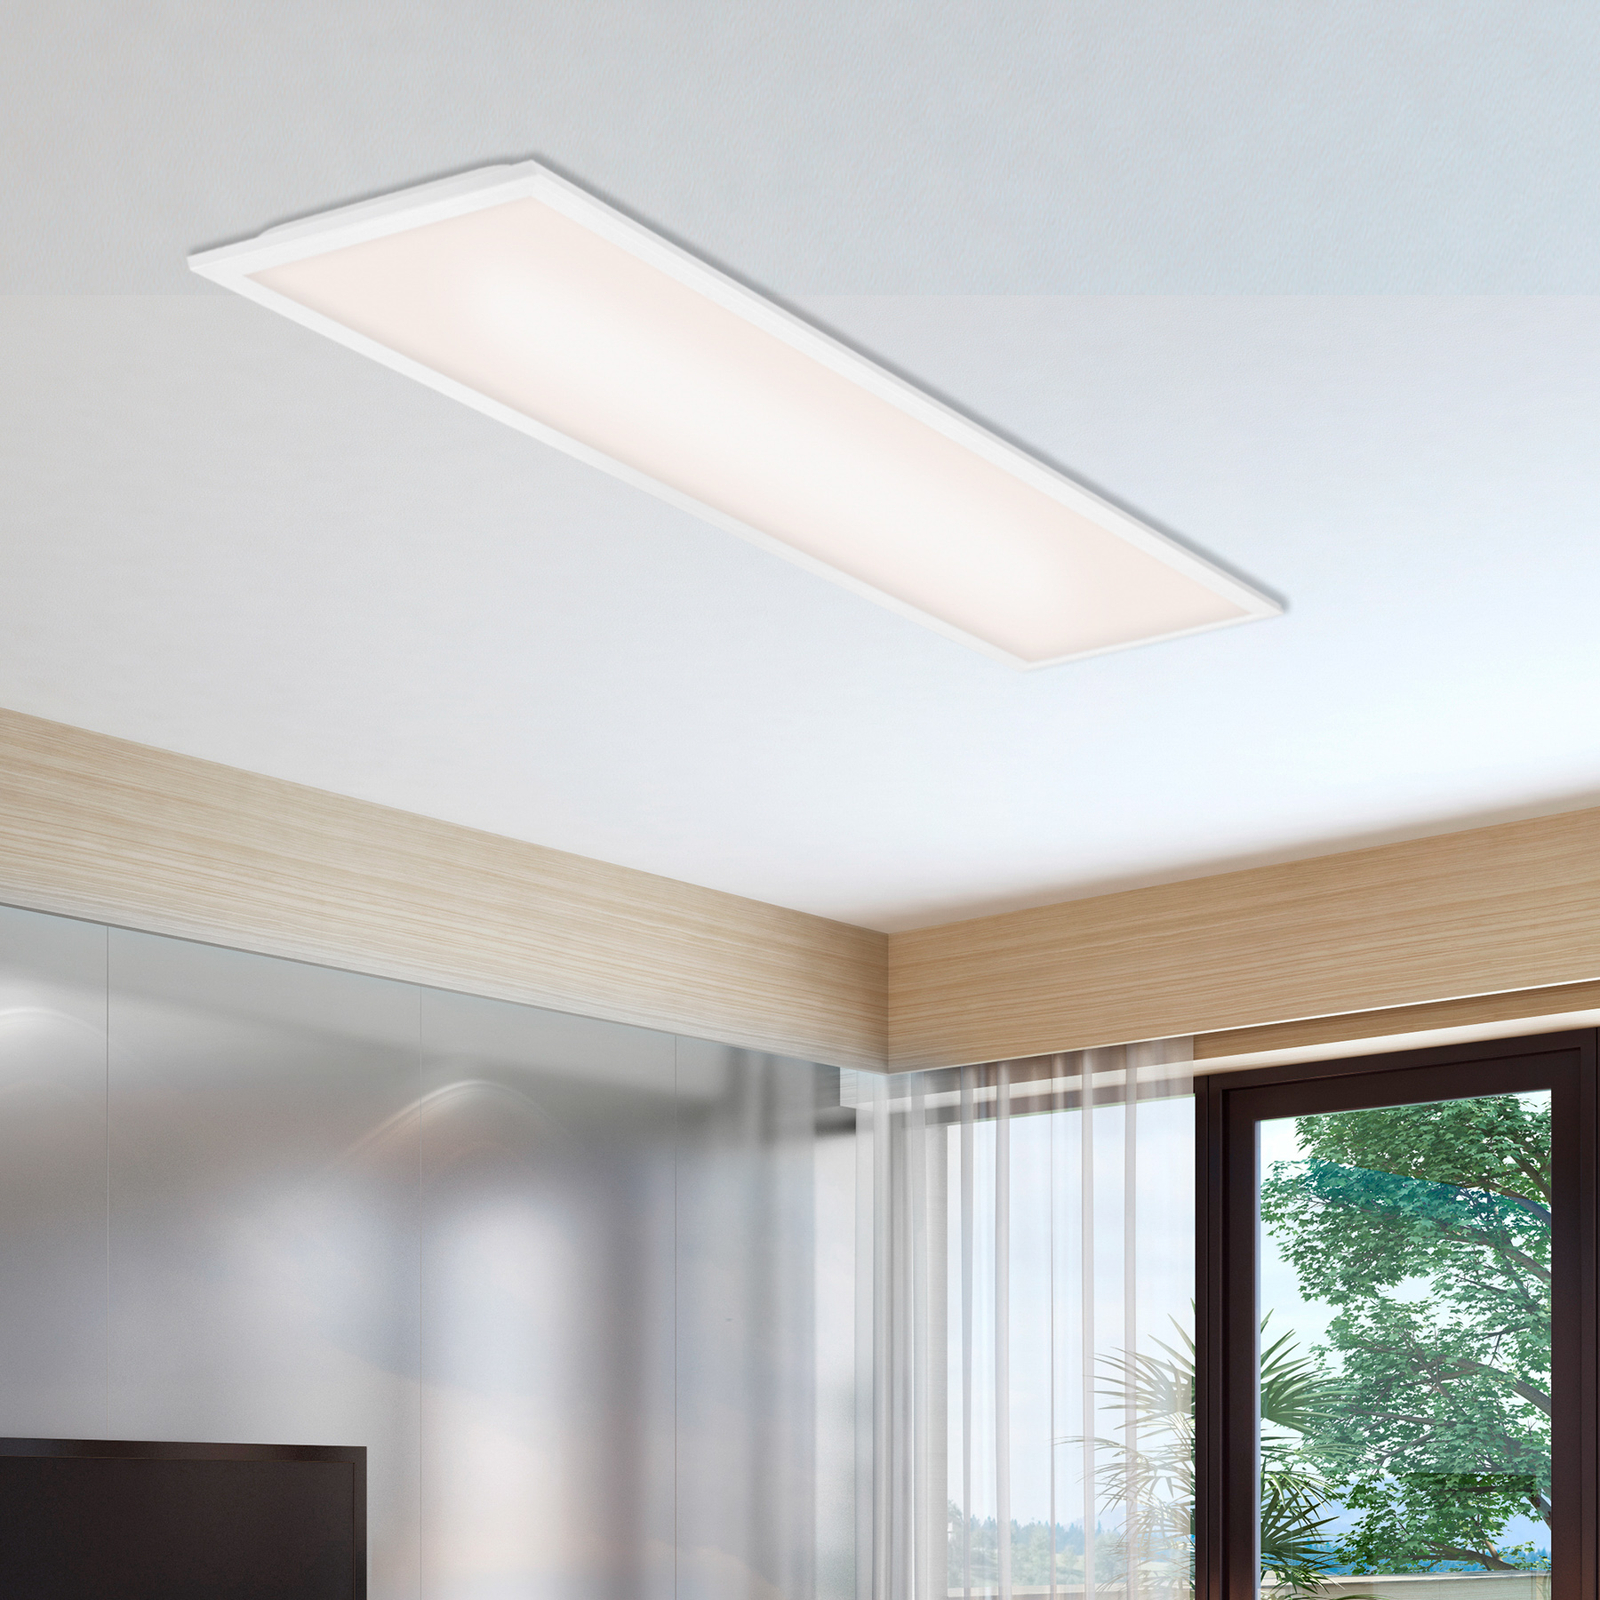 Panel LED Simple, biały, ultra płaski, 100x25cm